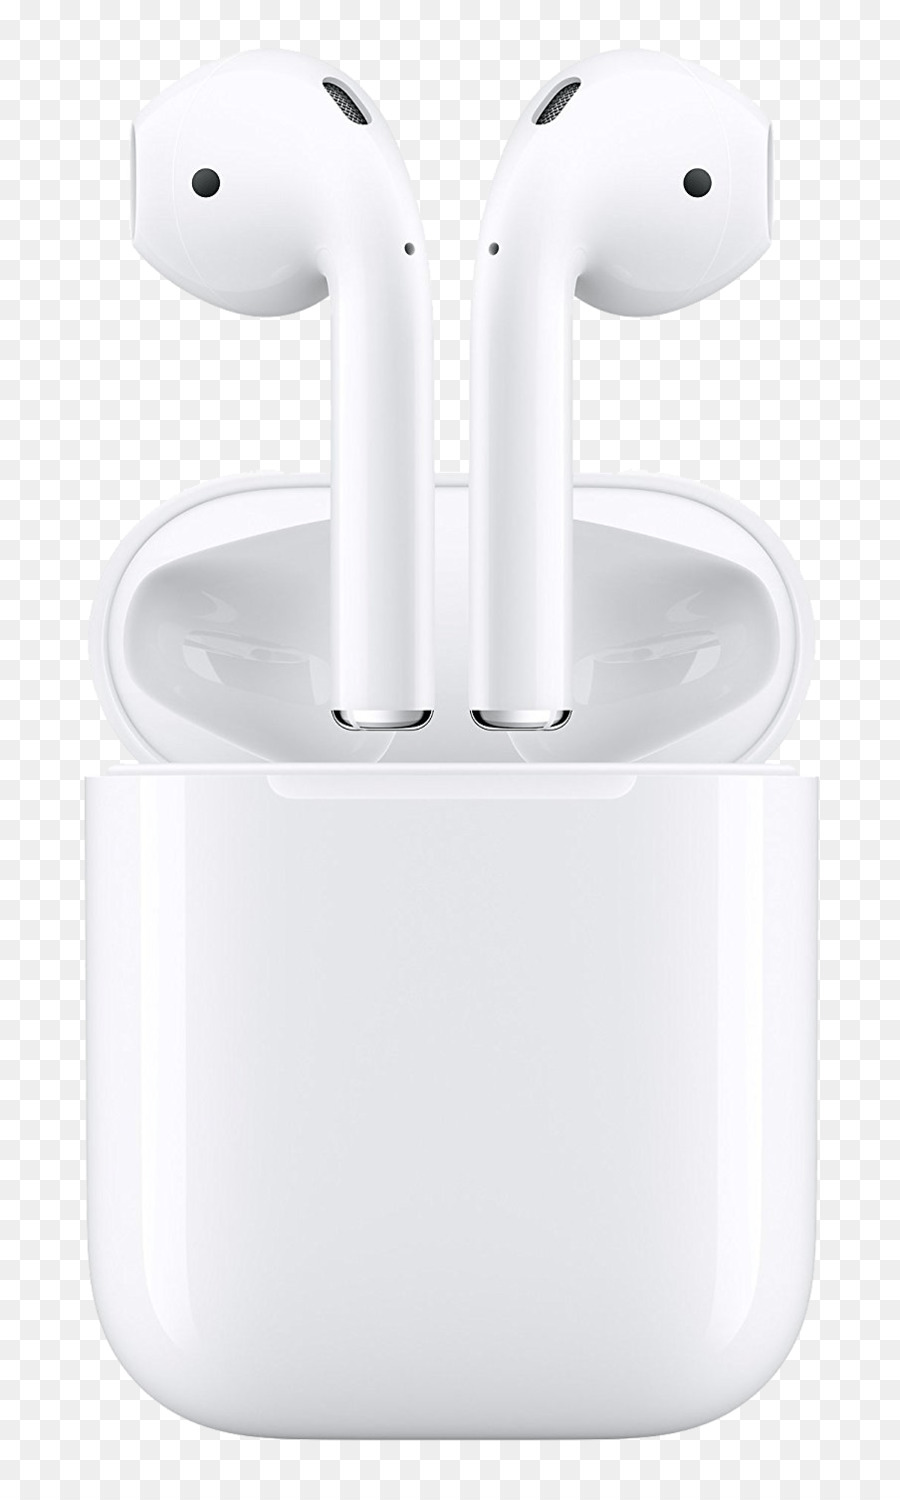 AirPods iPhone 7 Kopfhörer Bluetooth-Headset - Kopfhörer